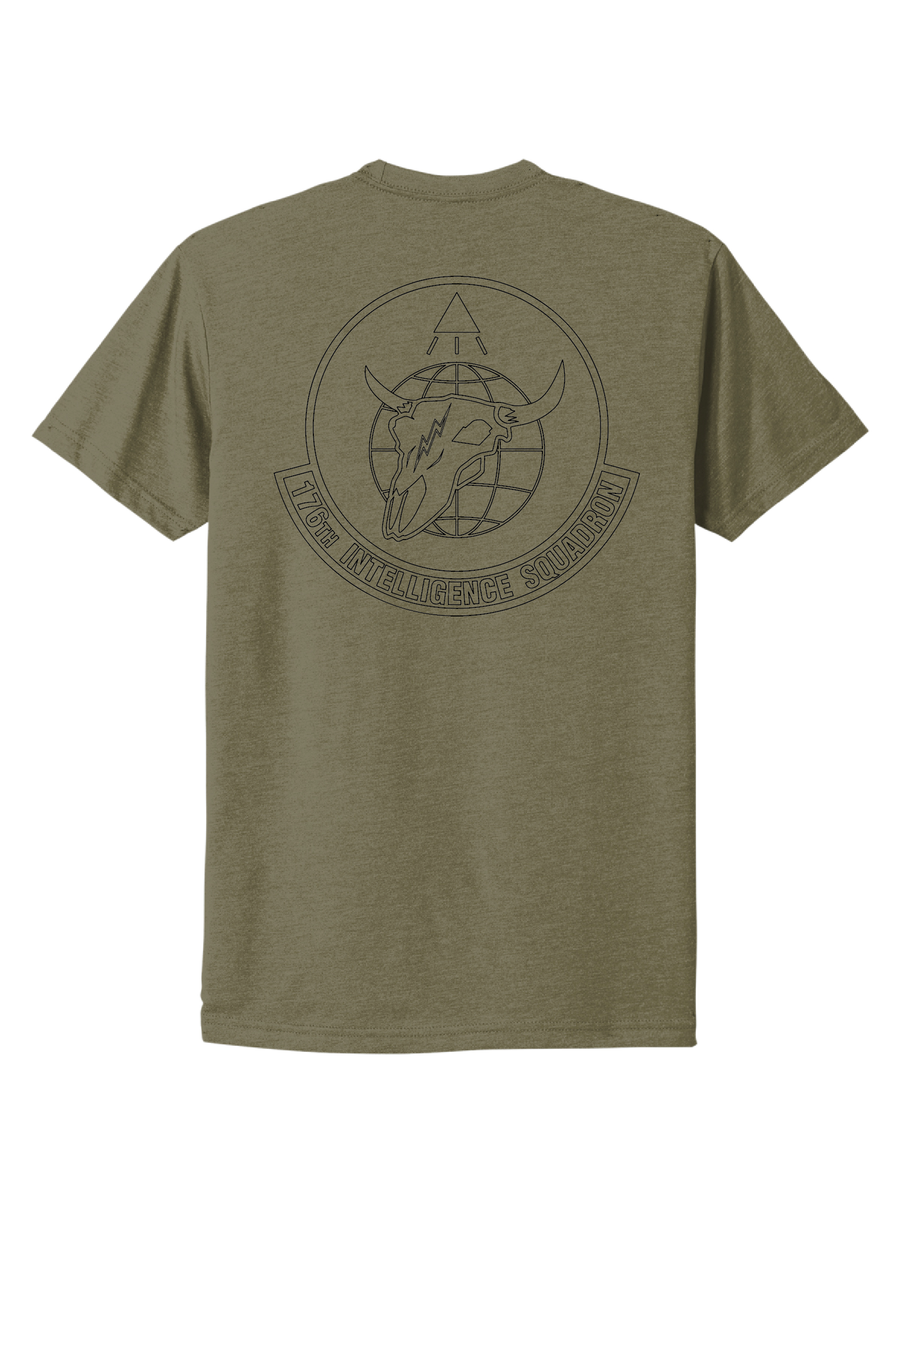 Happy Hooligans 176th Intelligence Squadron Black Badge T-shirt (Preorder)